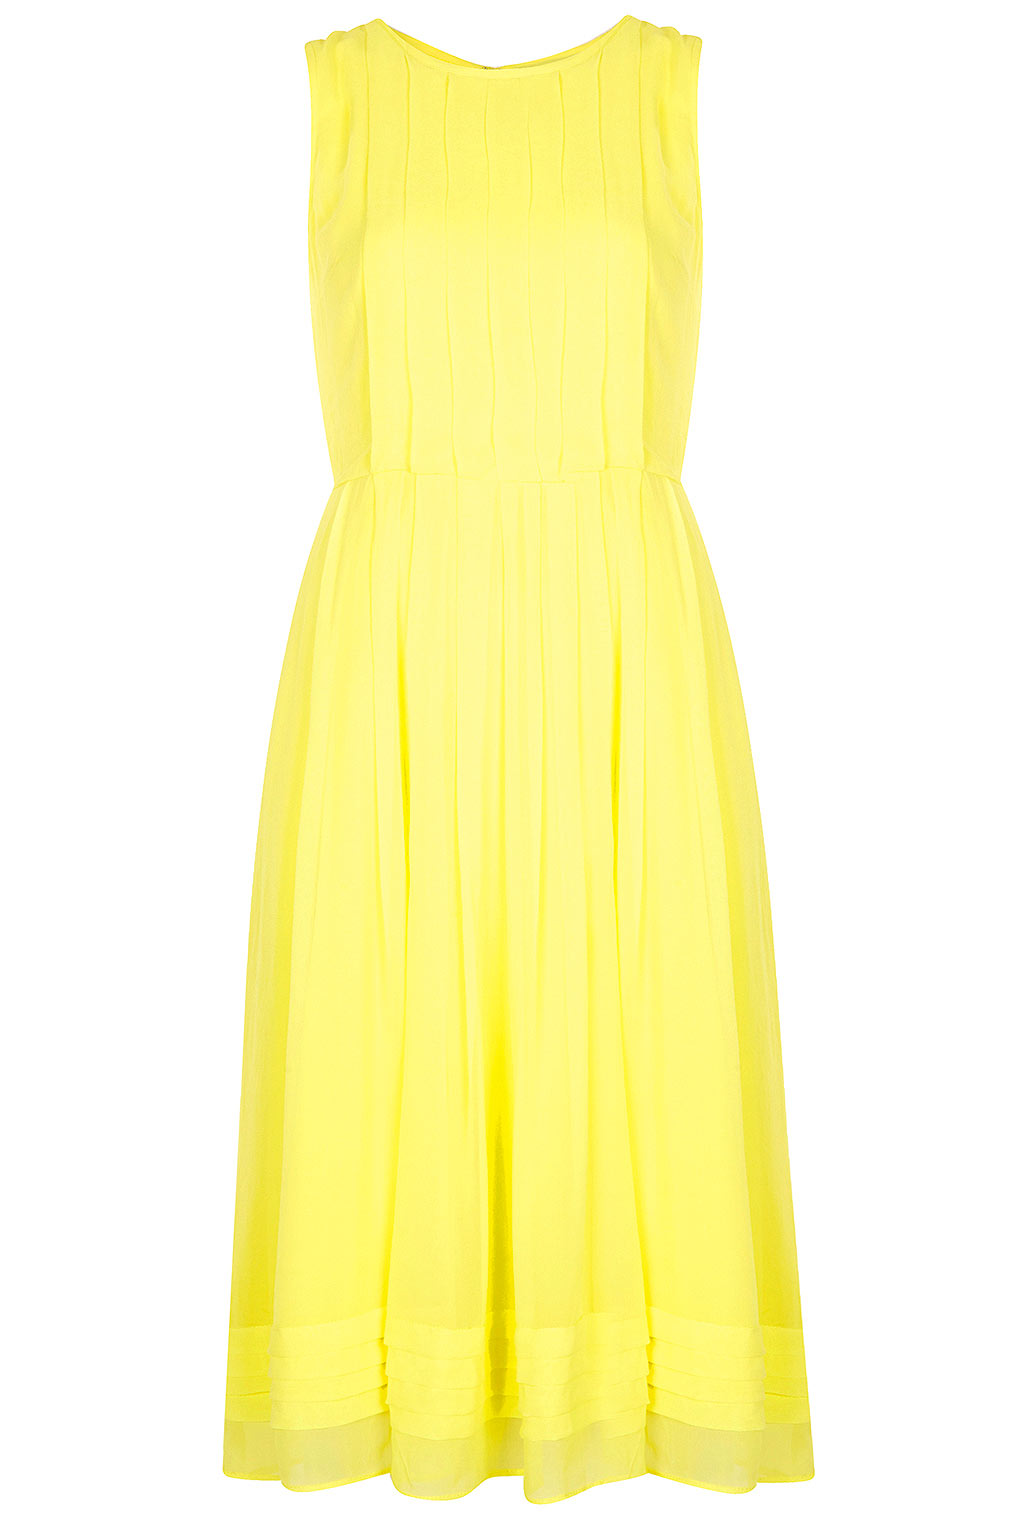 Lyst - Topshop Poppy Midi Dress in Yellow